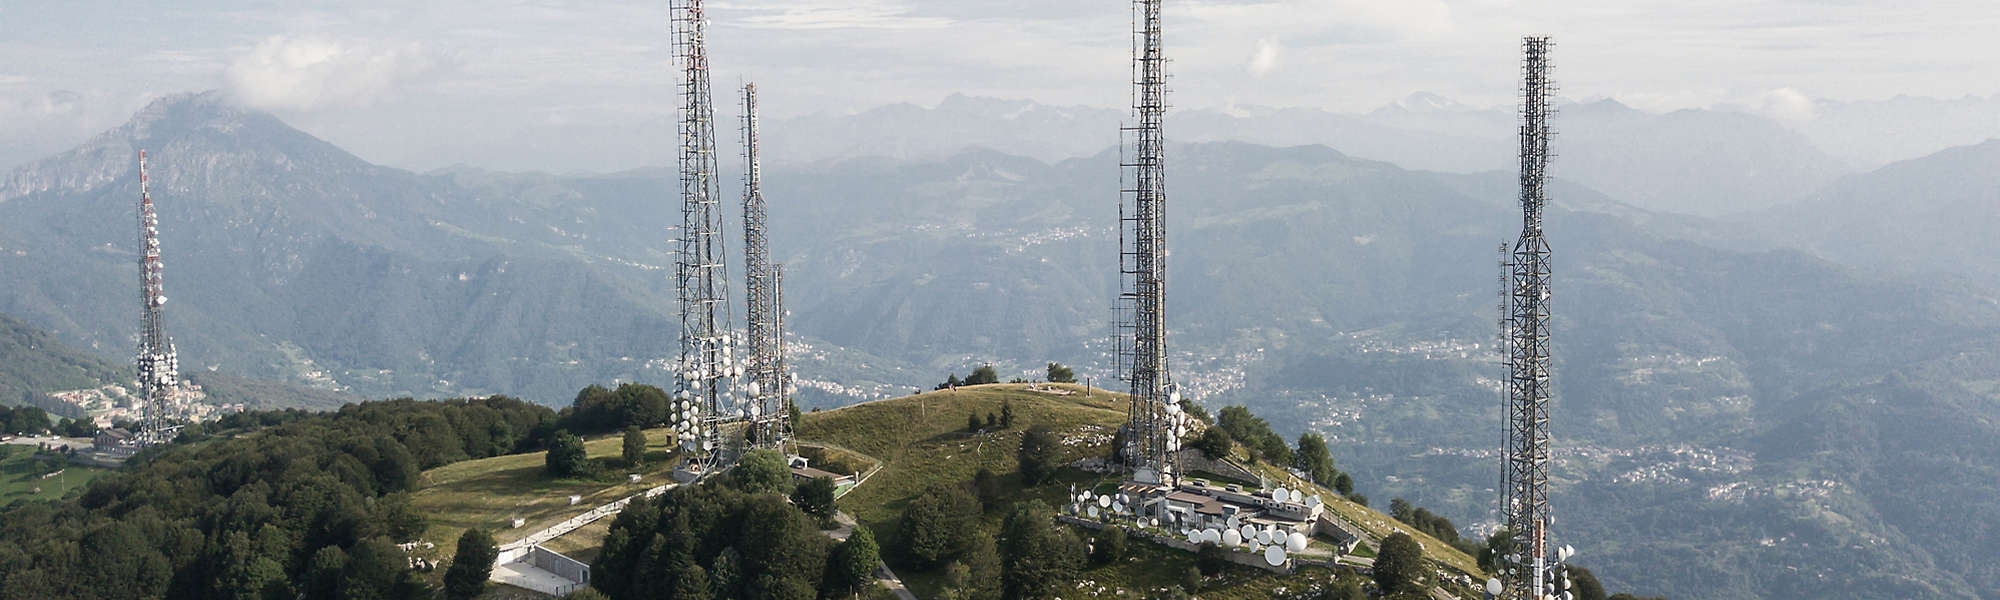 Towers on Linzone mountain peak.